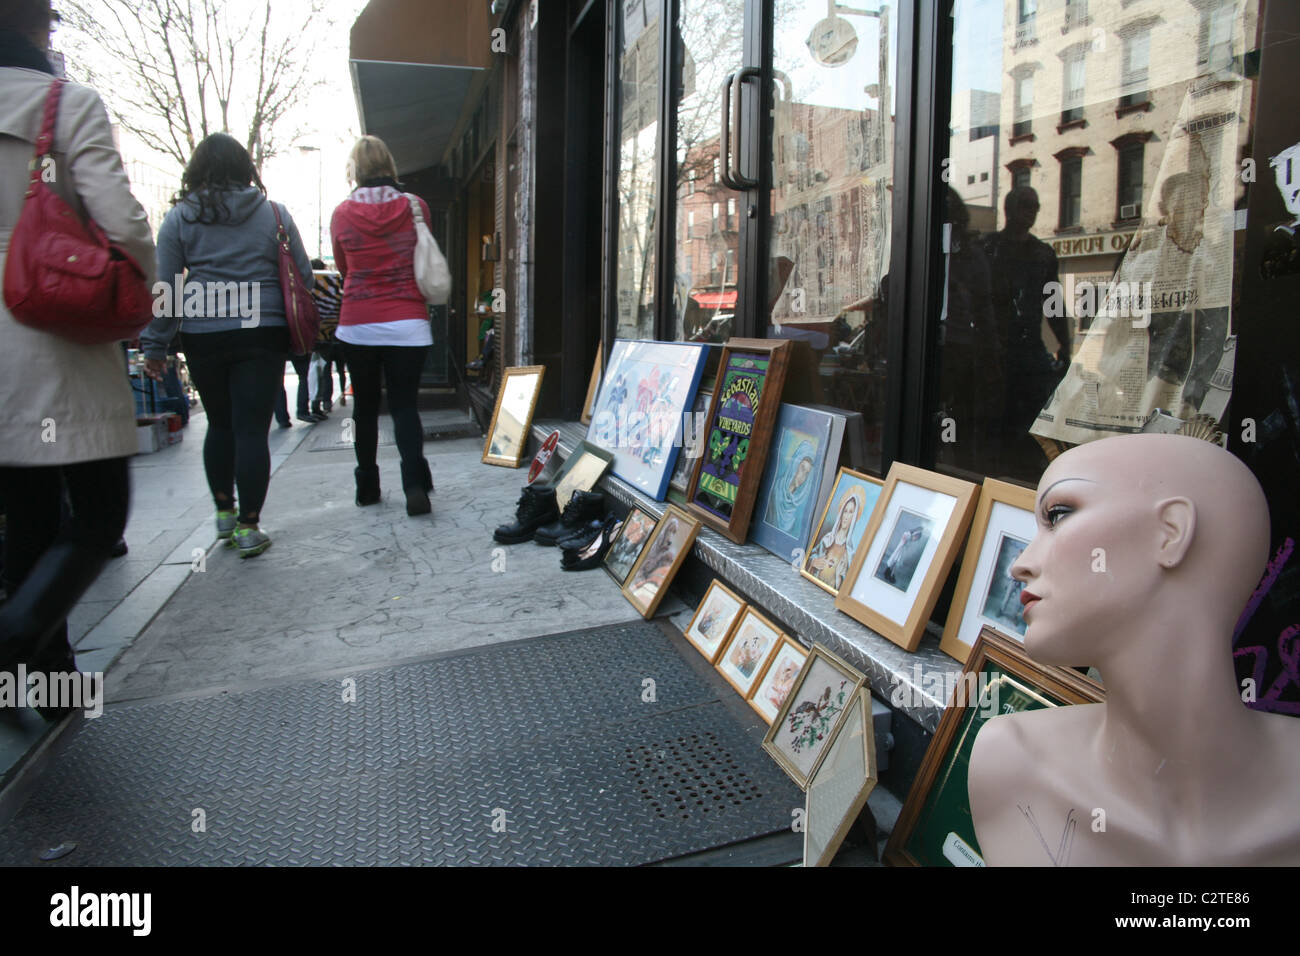 Street scene in Williamsburg, Brooklyn. Stock Photo